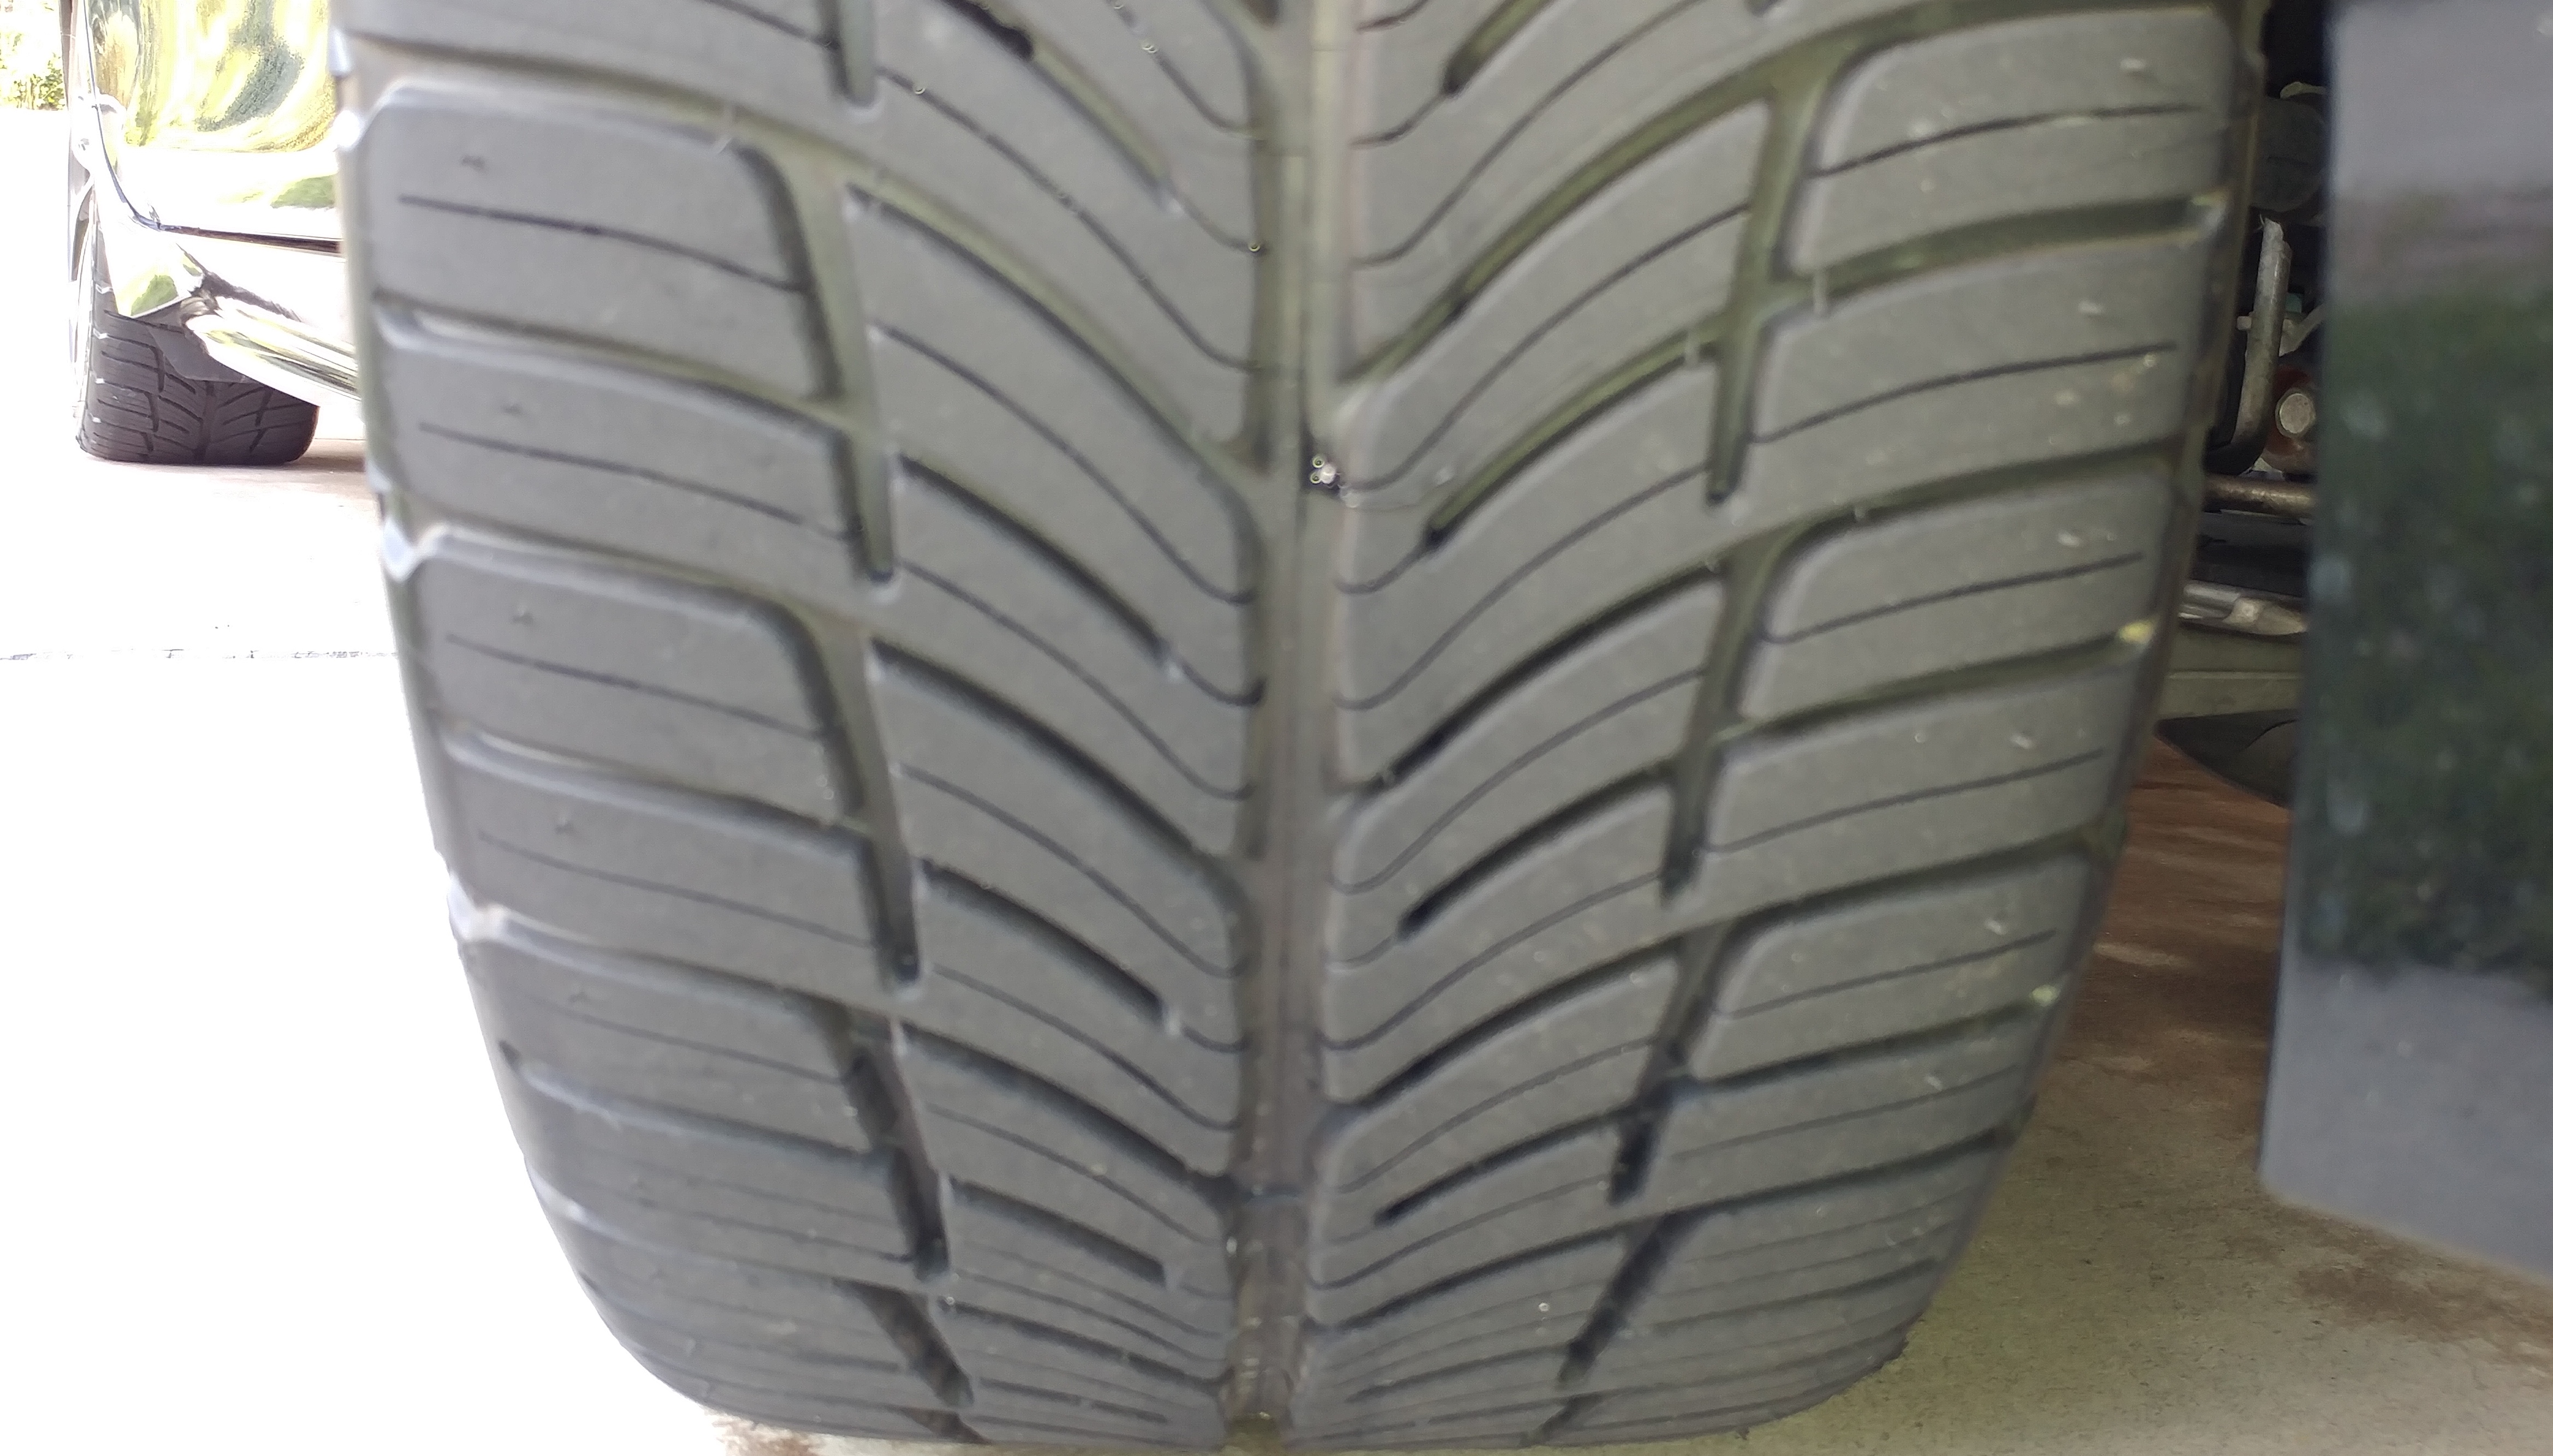 22 inch bf goodrich g force tires